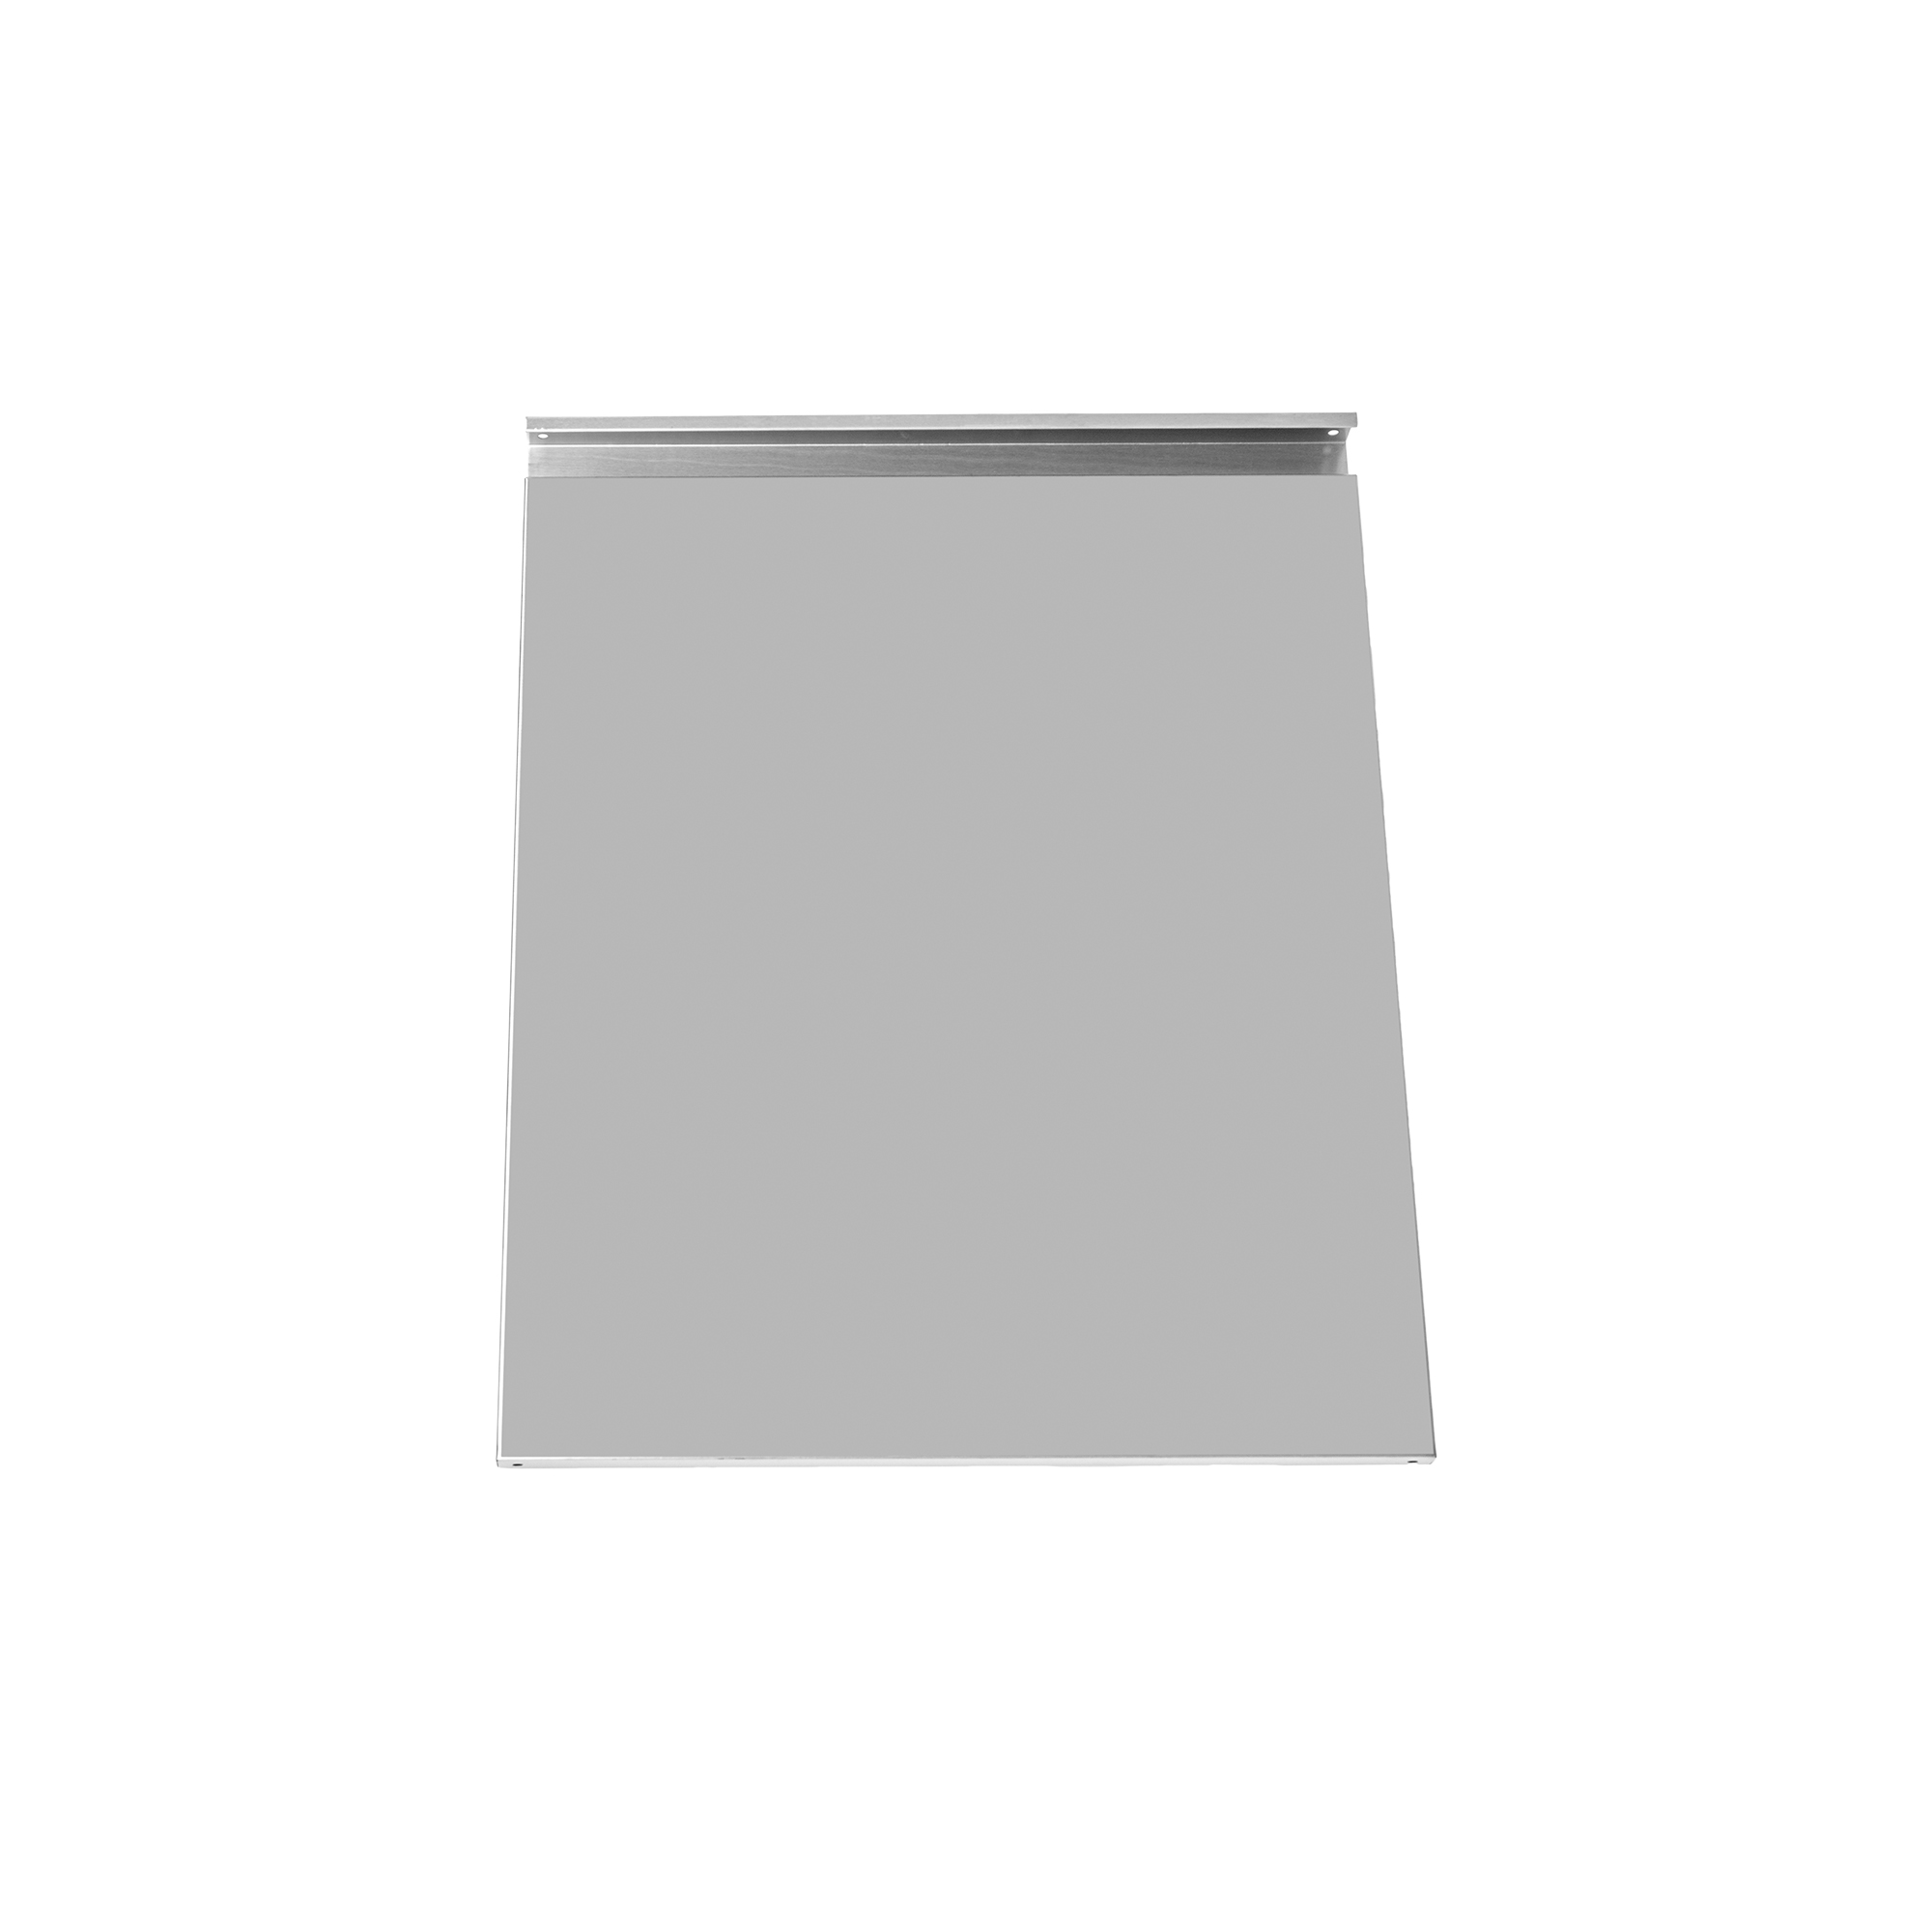 Door Videro G6/G6-S stainless steel 1 pce